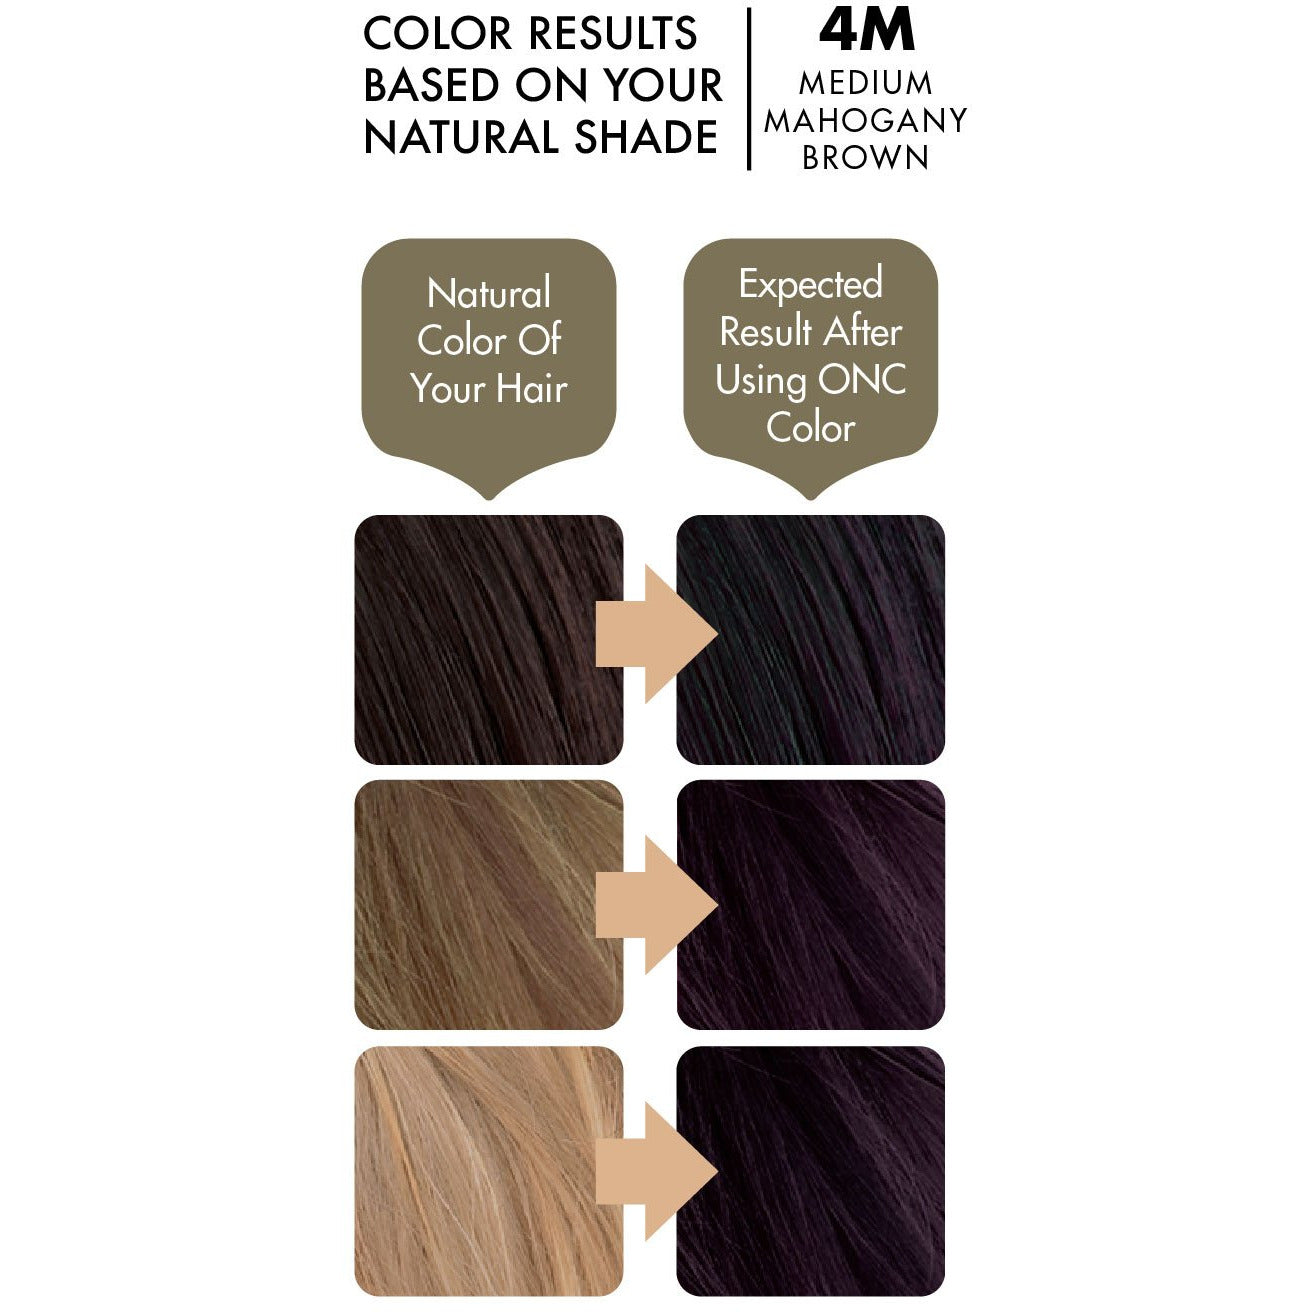 ONC 4M Medium Mahogany Brown Hair Dye With Organic Ingredients 120 mL / 4 fl. oz. Color Results